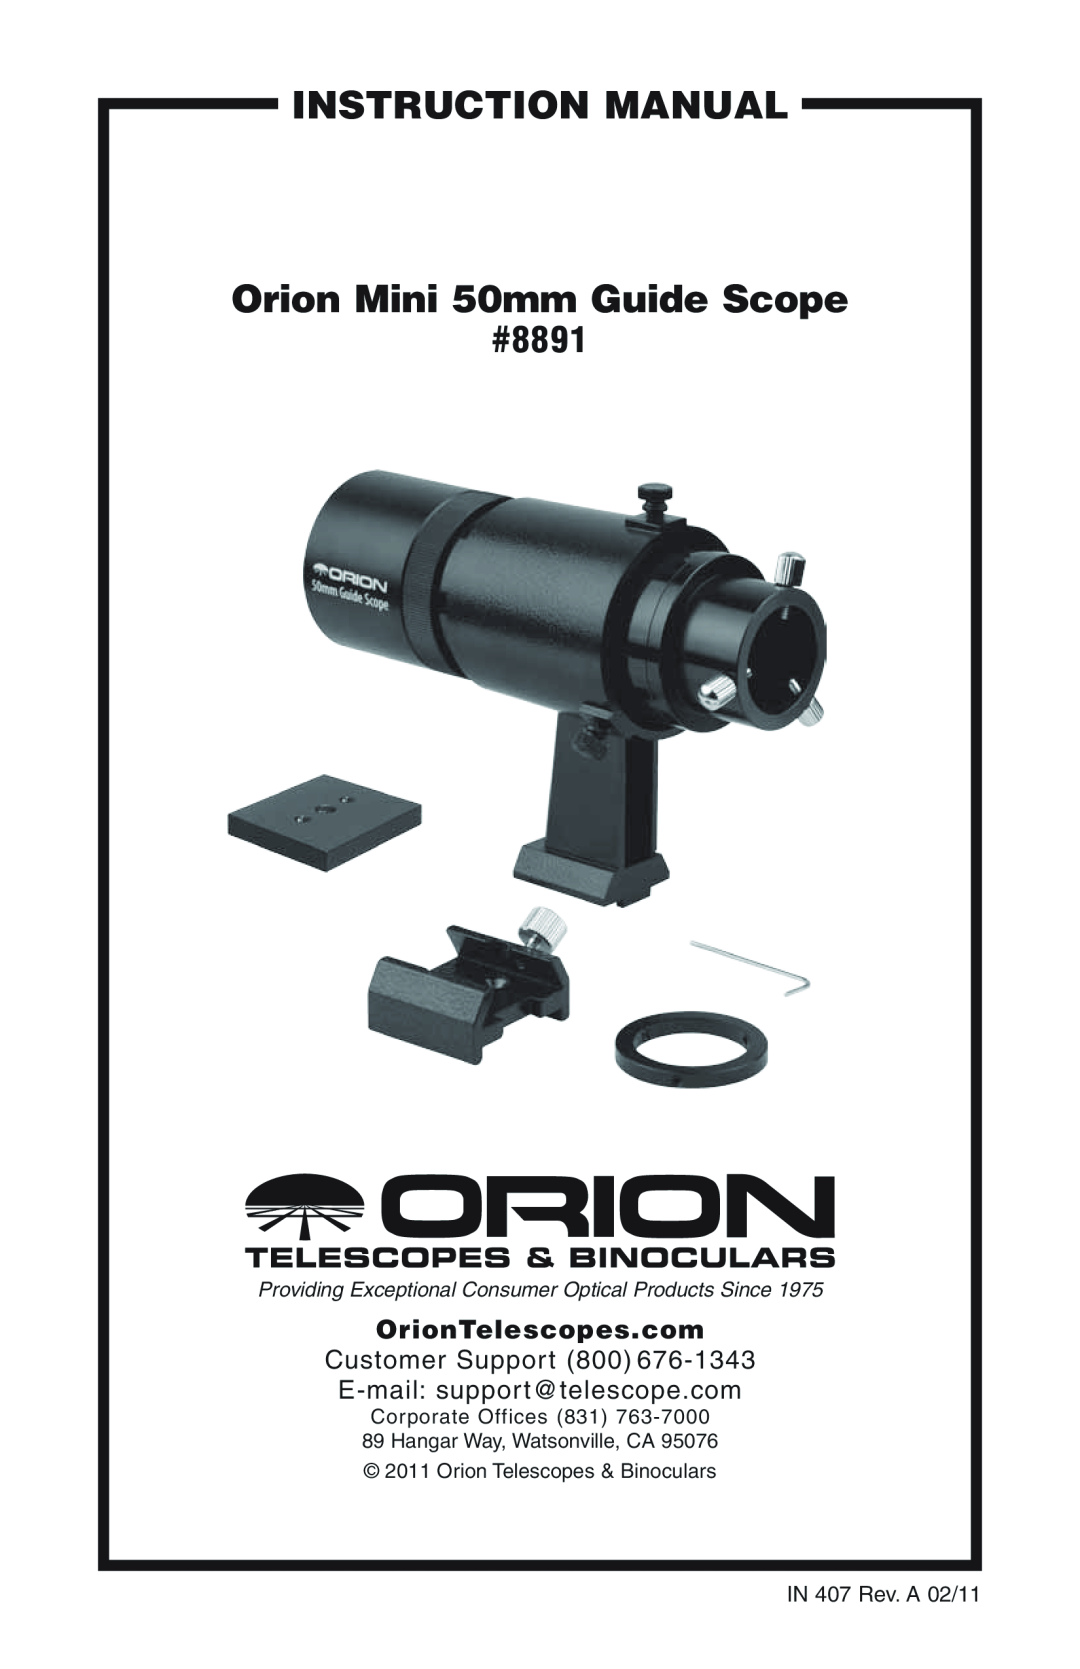 Orion instruction manual instruction Manual, Orion Mini 50mm Guide Scope, OrionTelescopes.com, #8891 